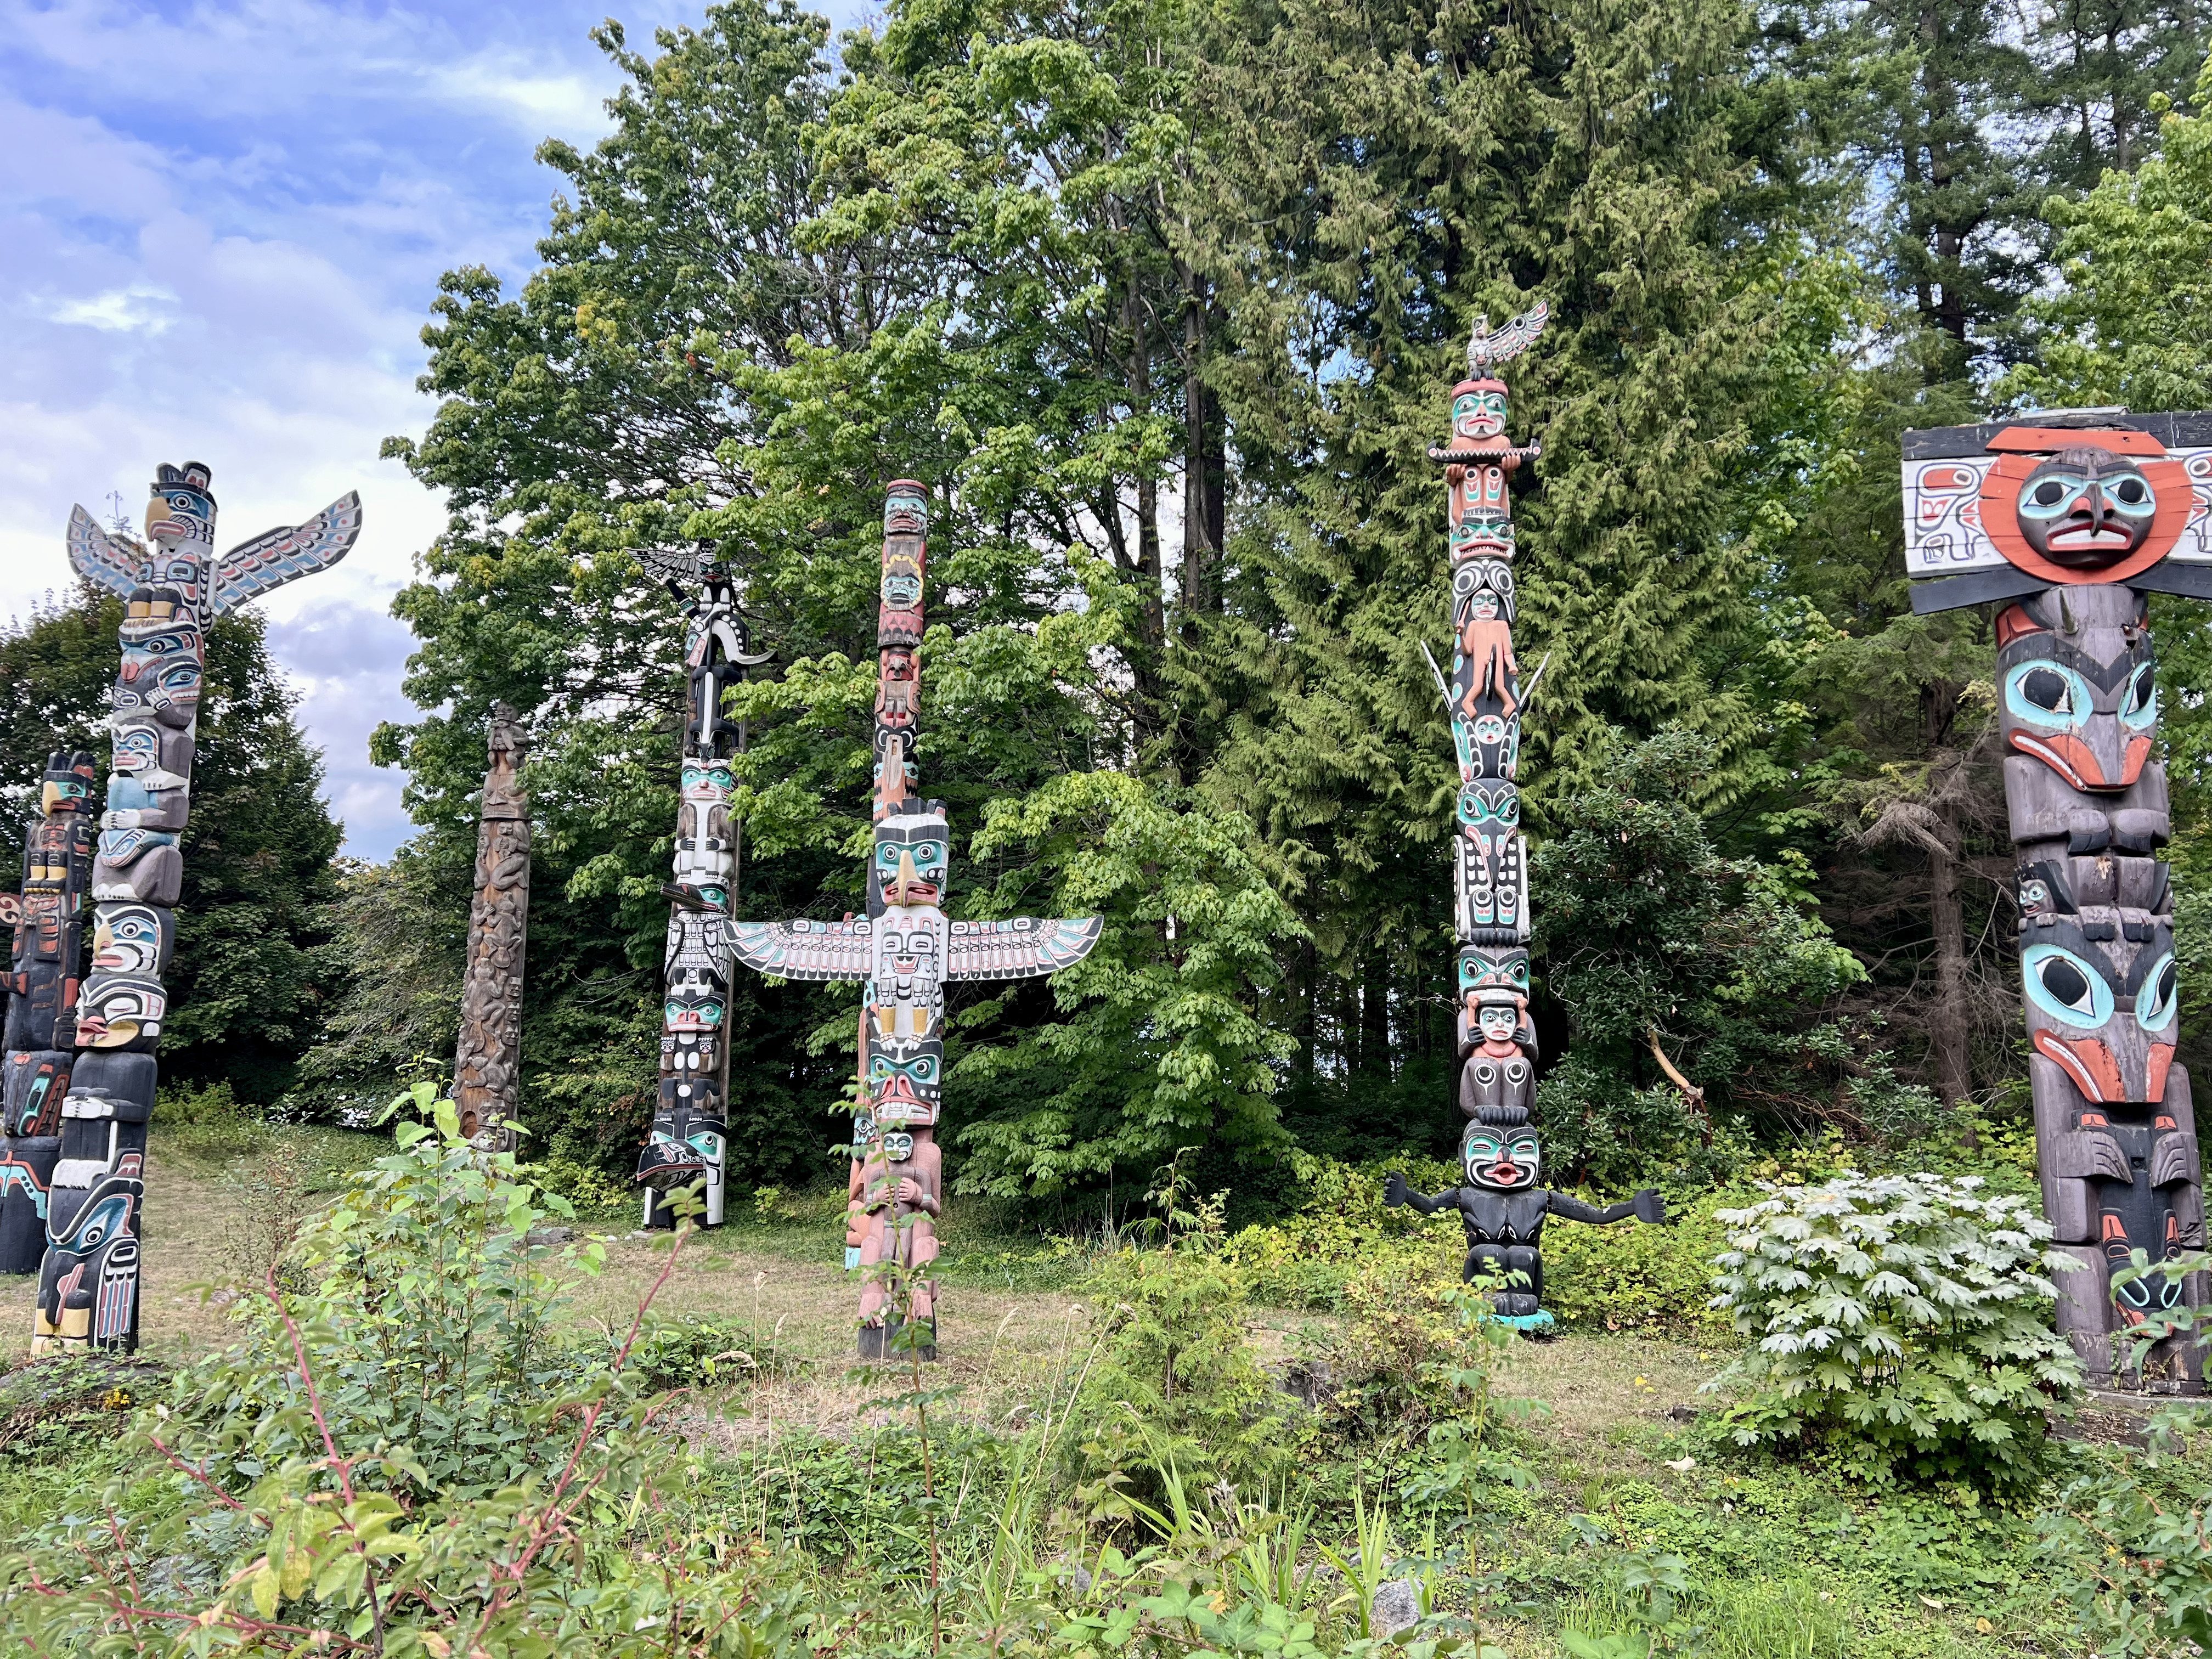 Totem poles at Stanley Park, Vancouver.